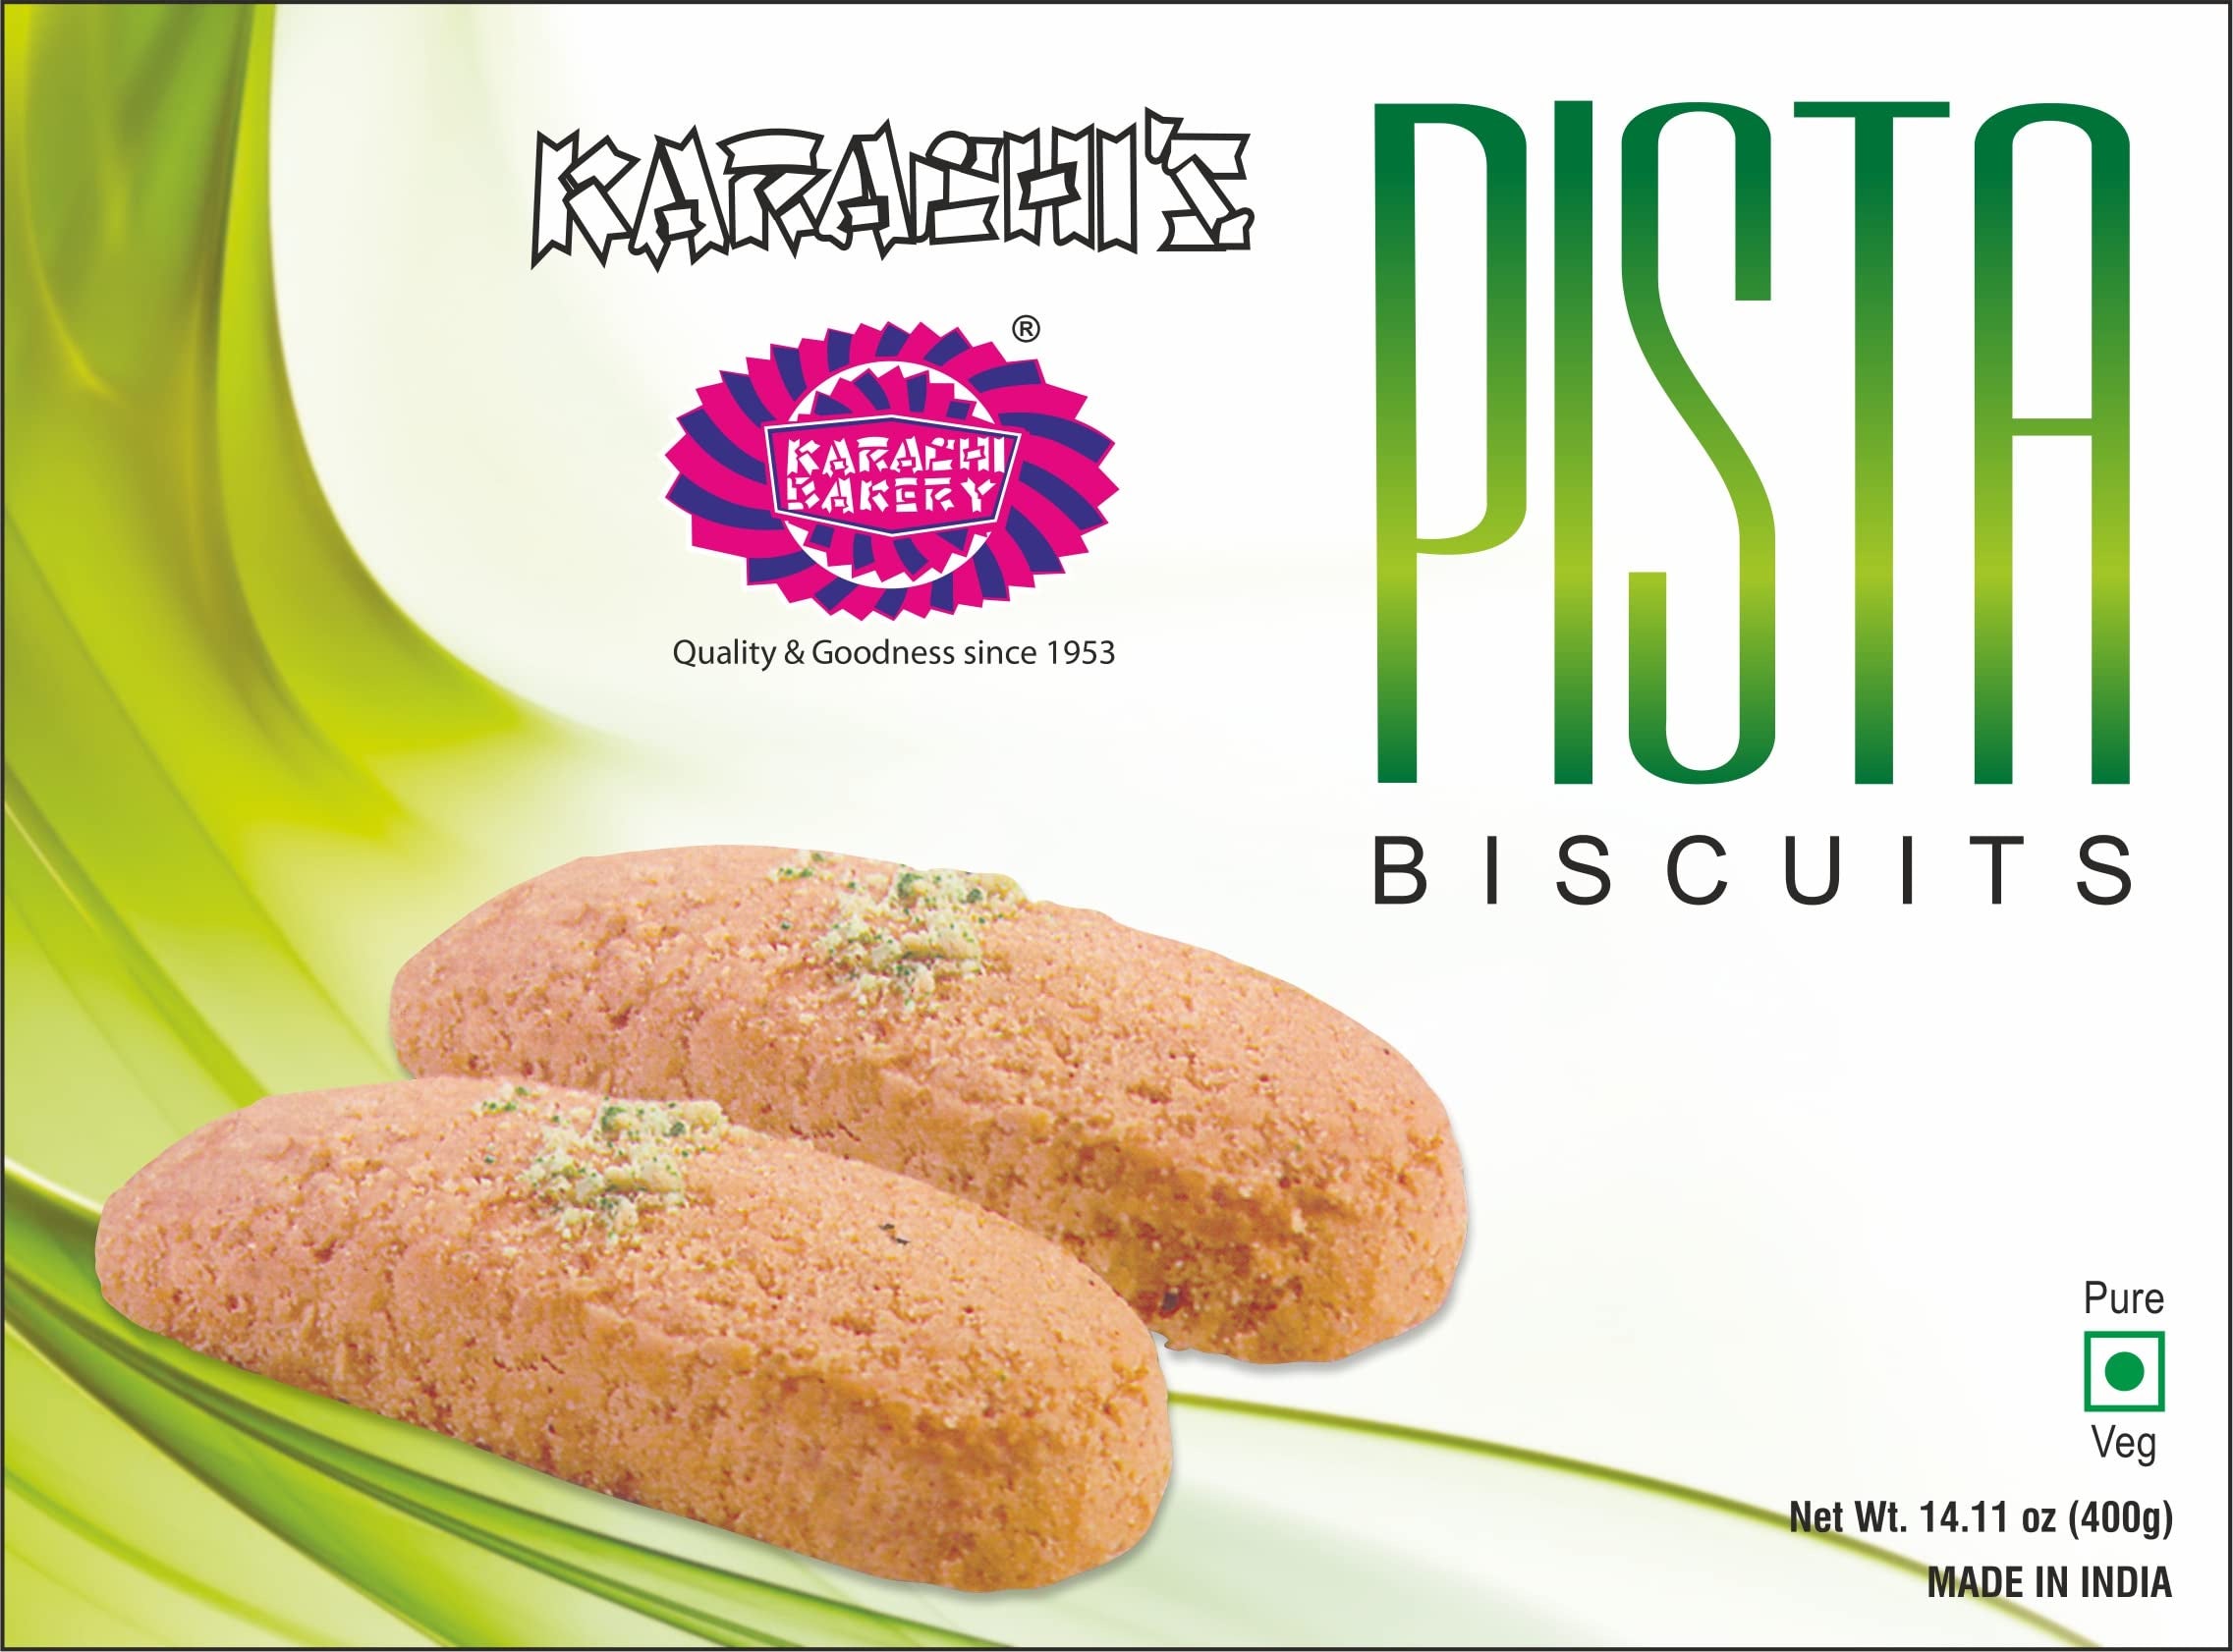 Karachi Bakery - Green Pista & Cashew Biscuits 400g